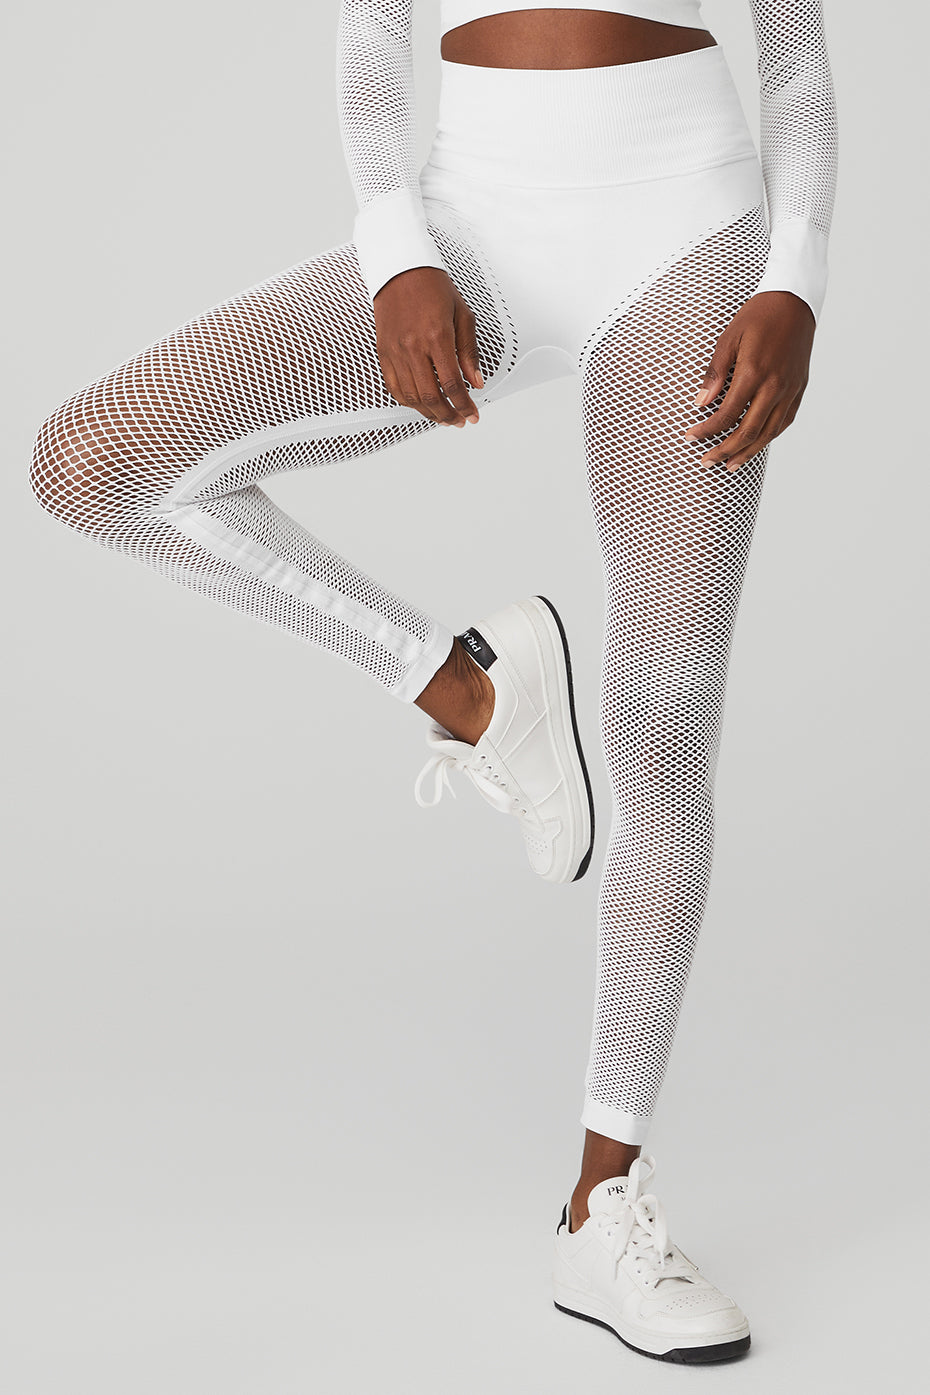 ALO Yoga, Pants & Jumpsuits, Alo Yoga Coast Leggings White Sheer Panels  Size Large Brand New With Tags Bnwt